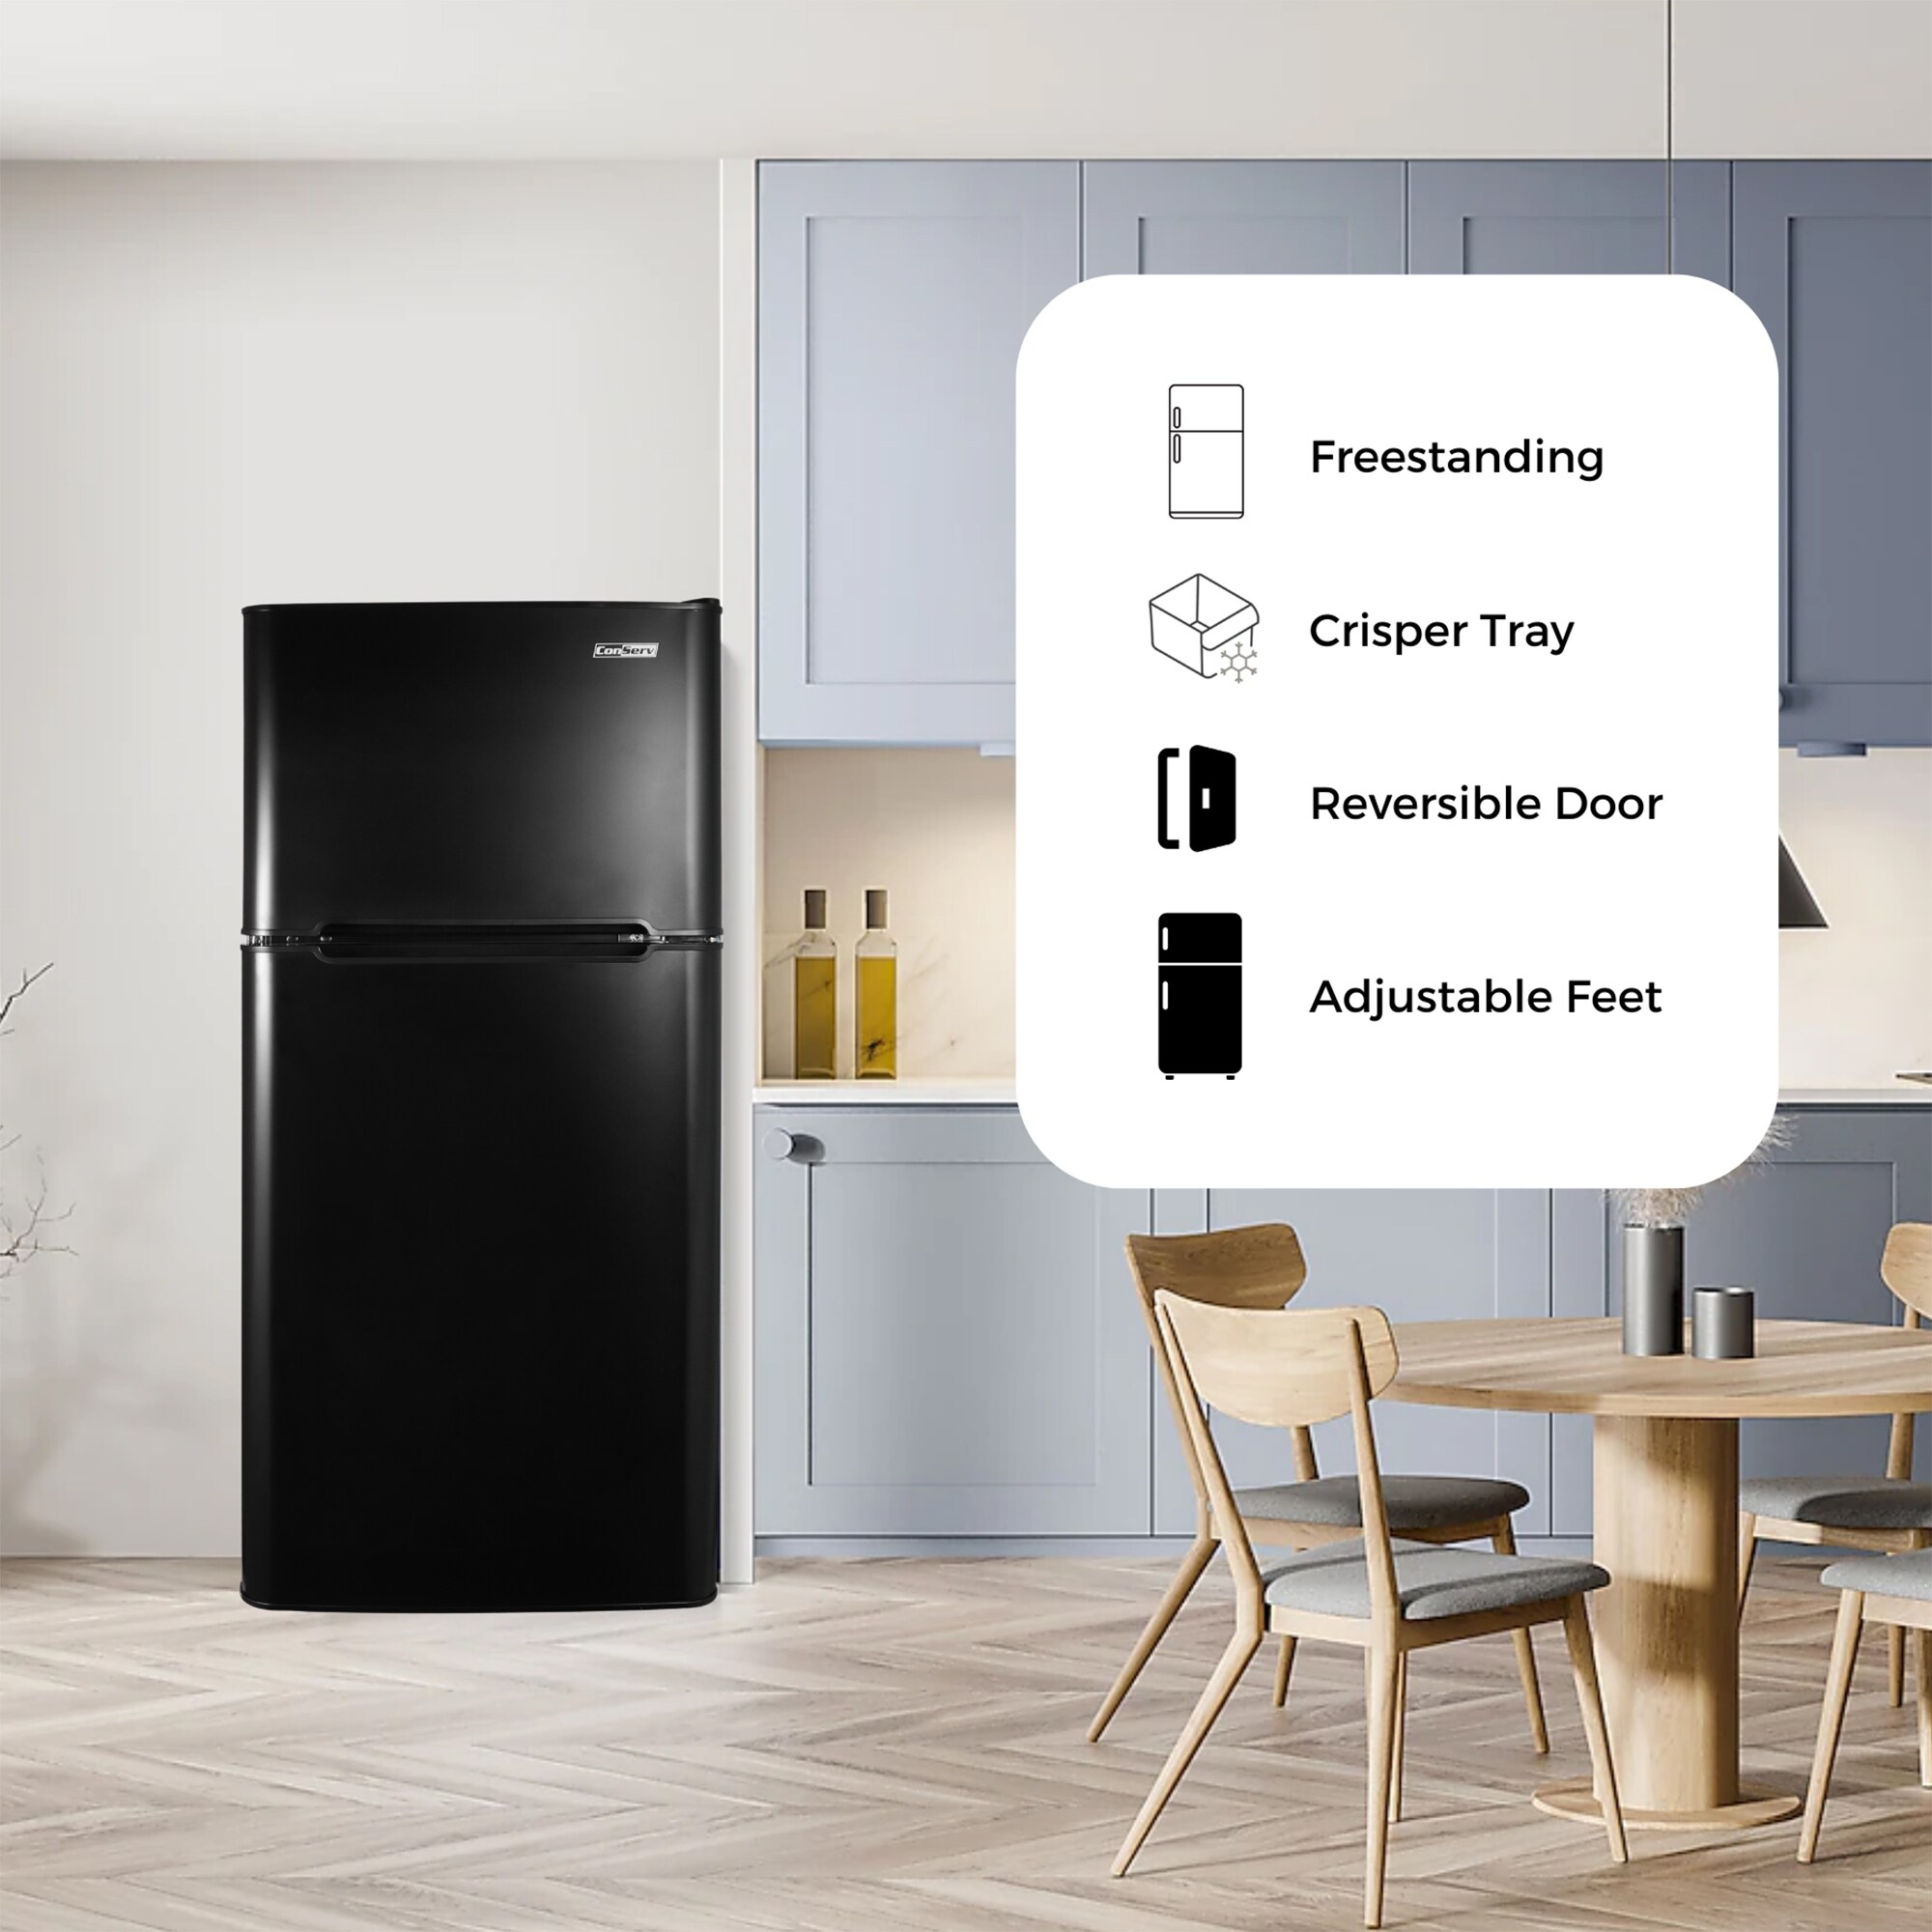 4.5 Cu. Ft. Capacity ENERGY STAR® Qualified Compact Refrigerator, Black